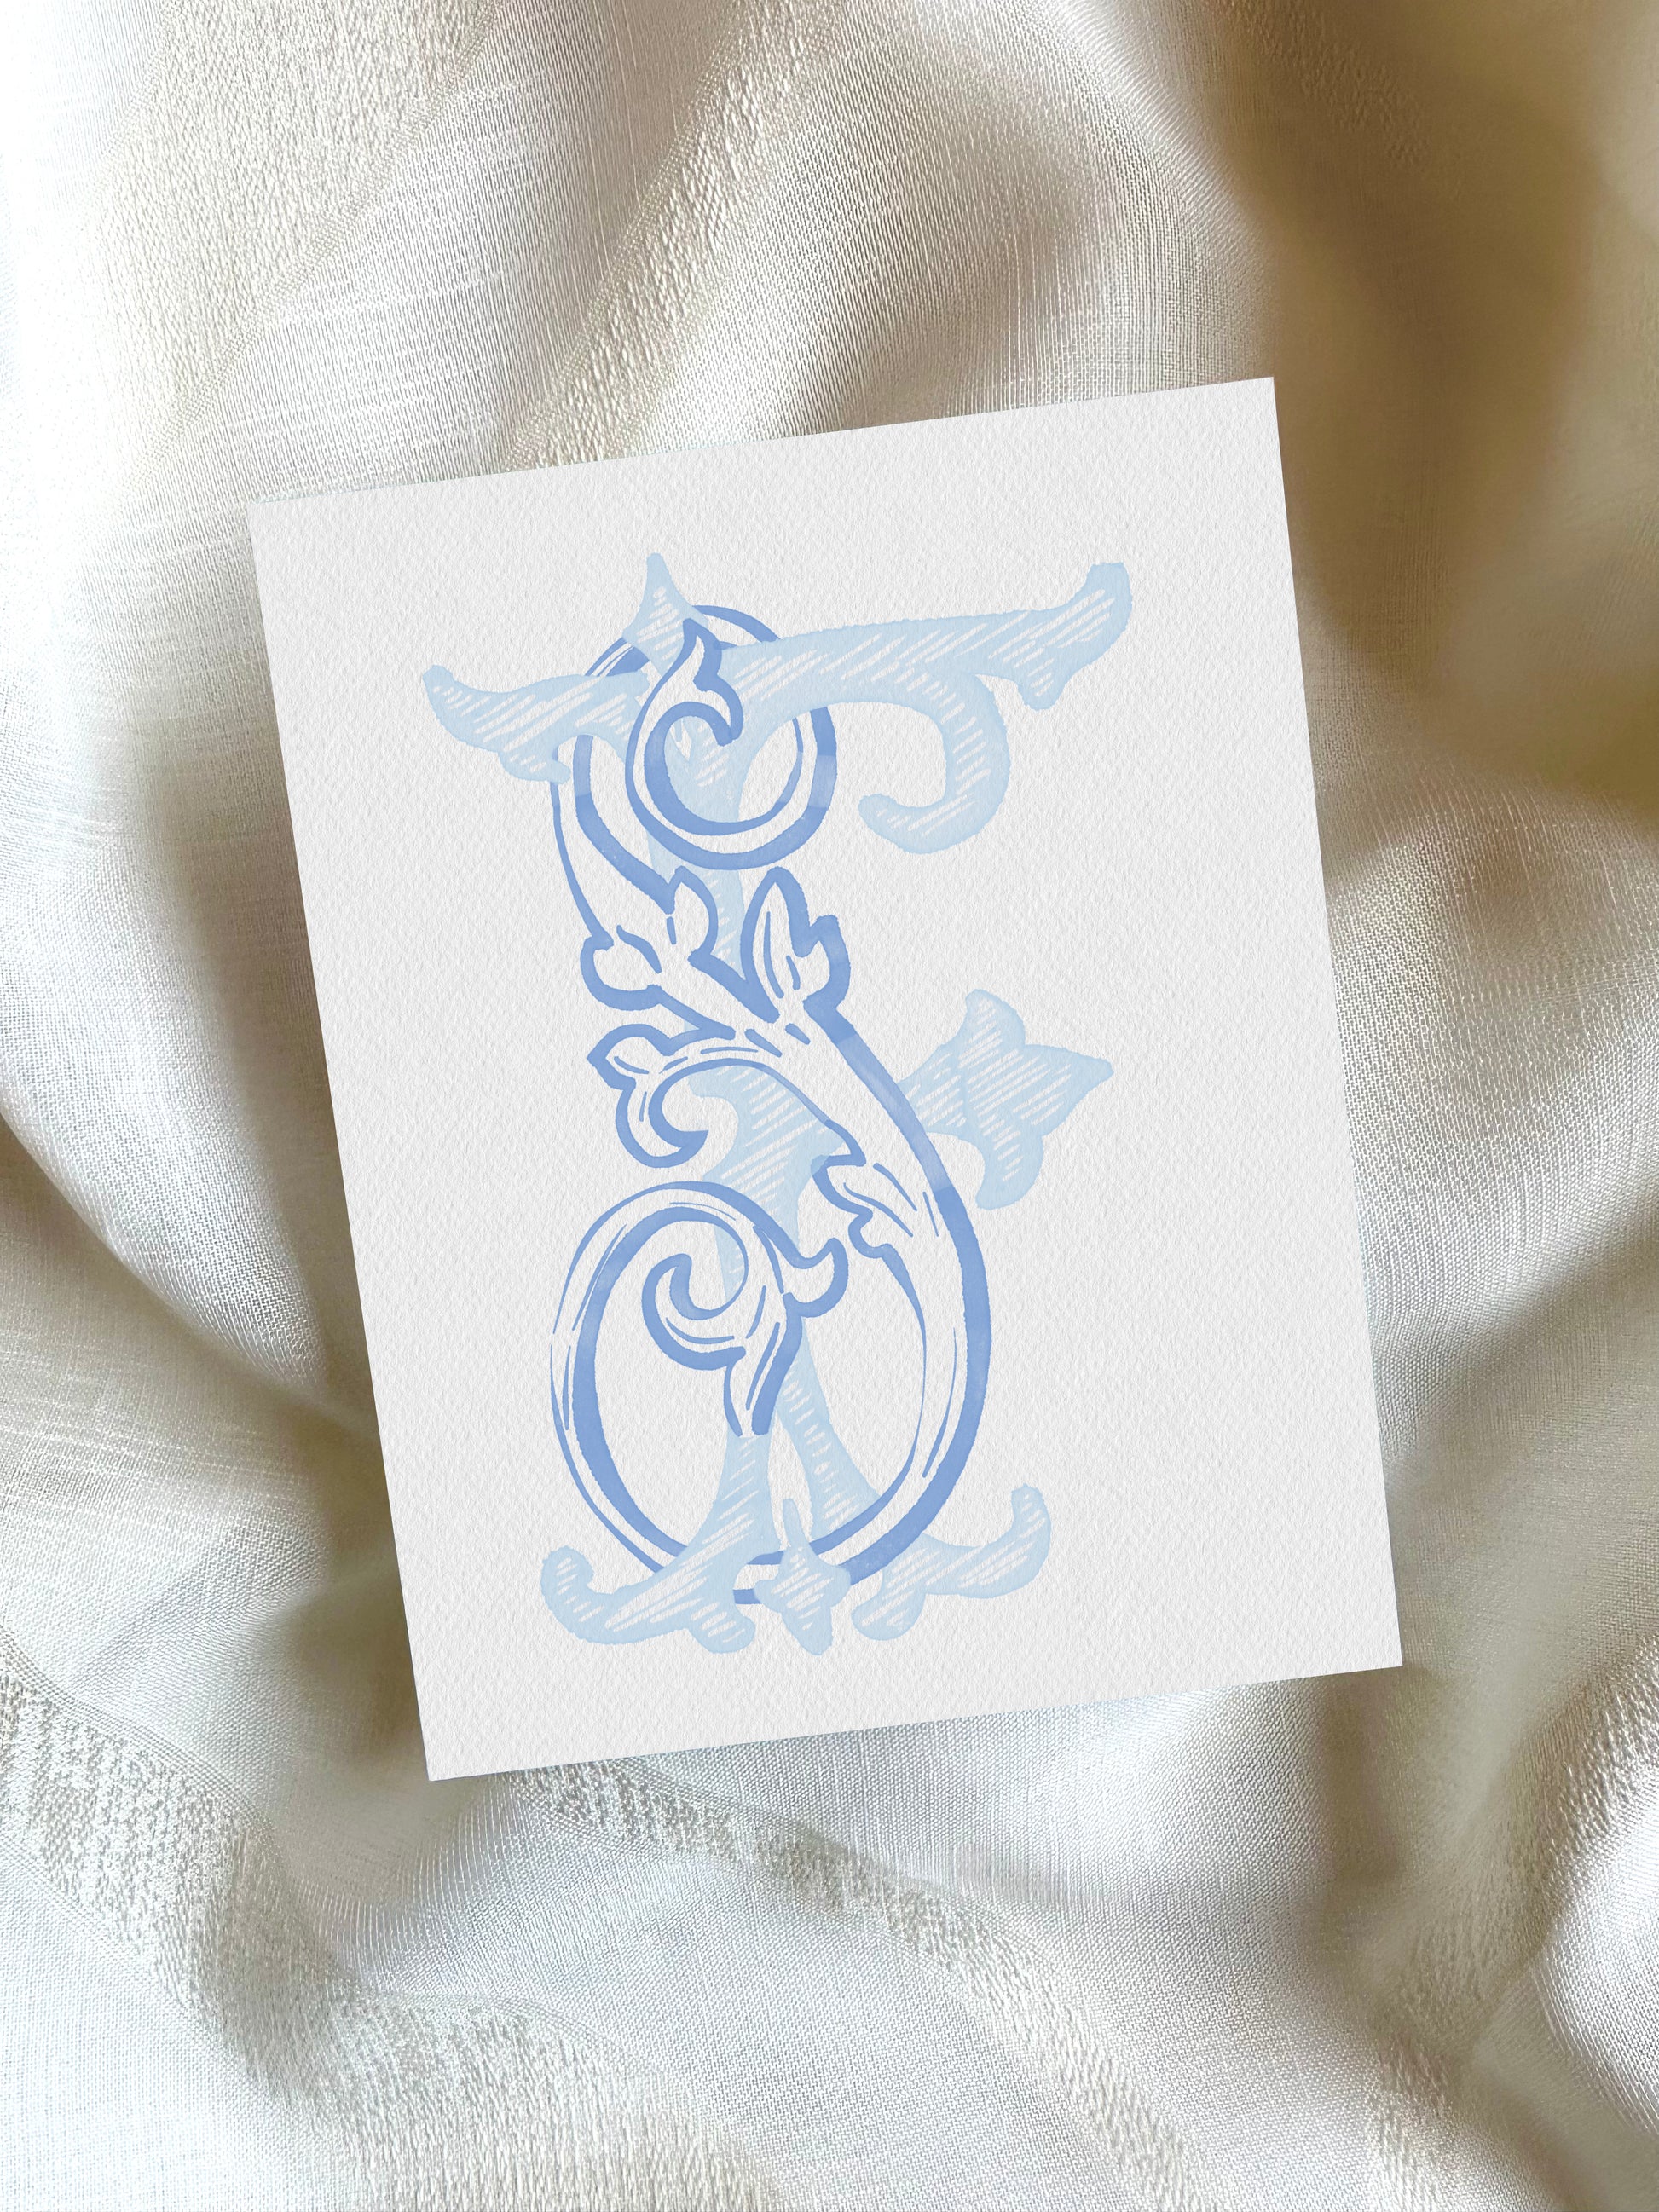 2 Letter Monogram with Letters FS SF | Digital Download - Wedding Monogram SVG, Personal Logo, Wedding Logo for Wedding Invitations The Wedding Crest Lab